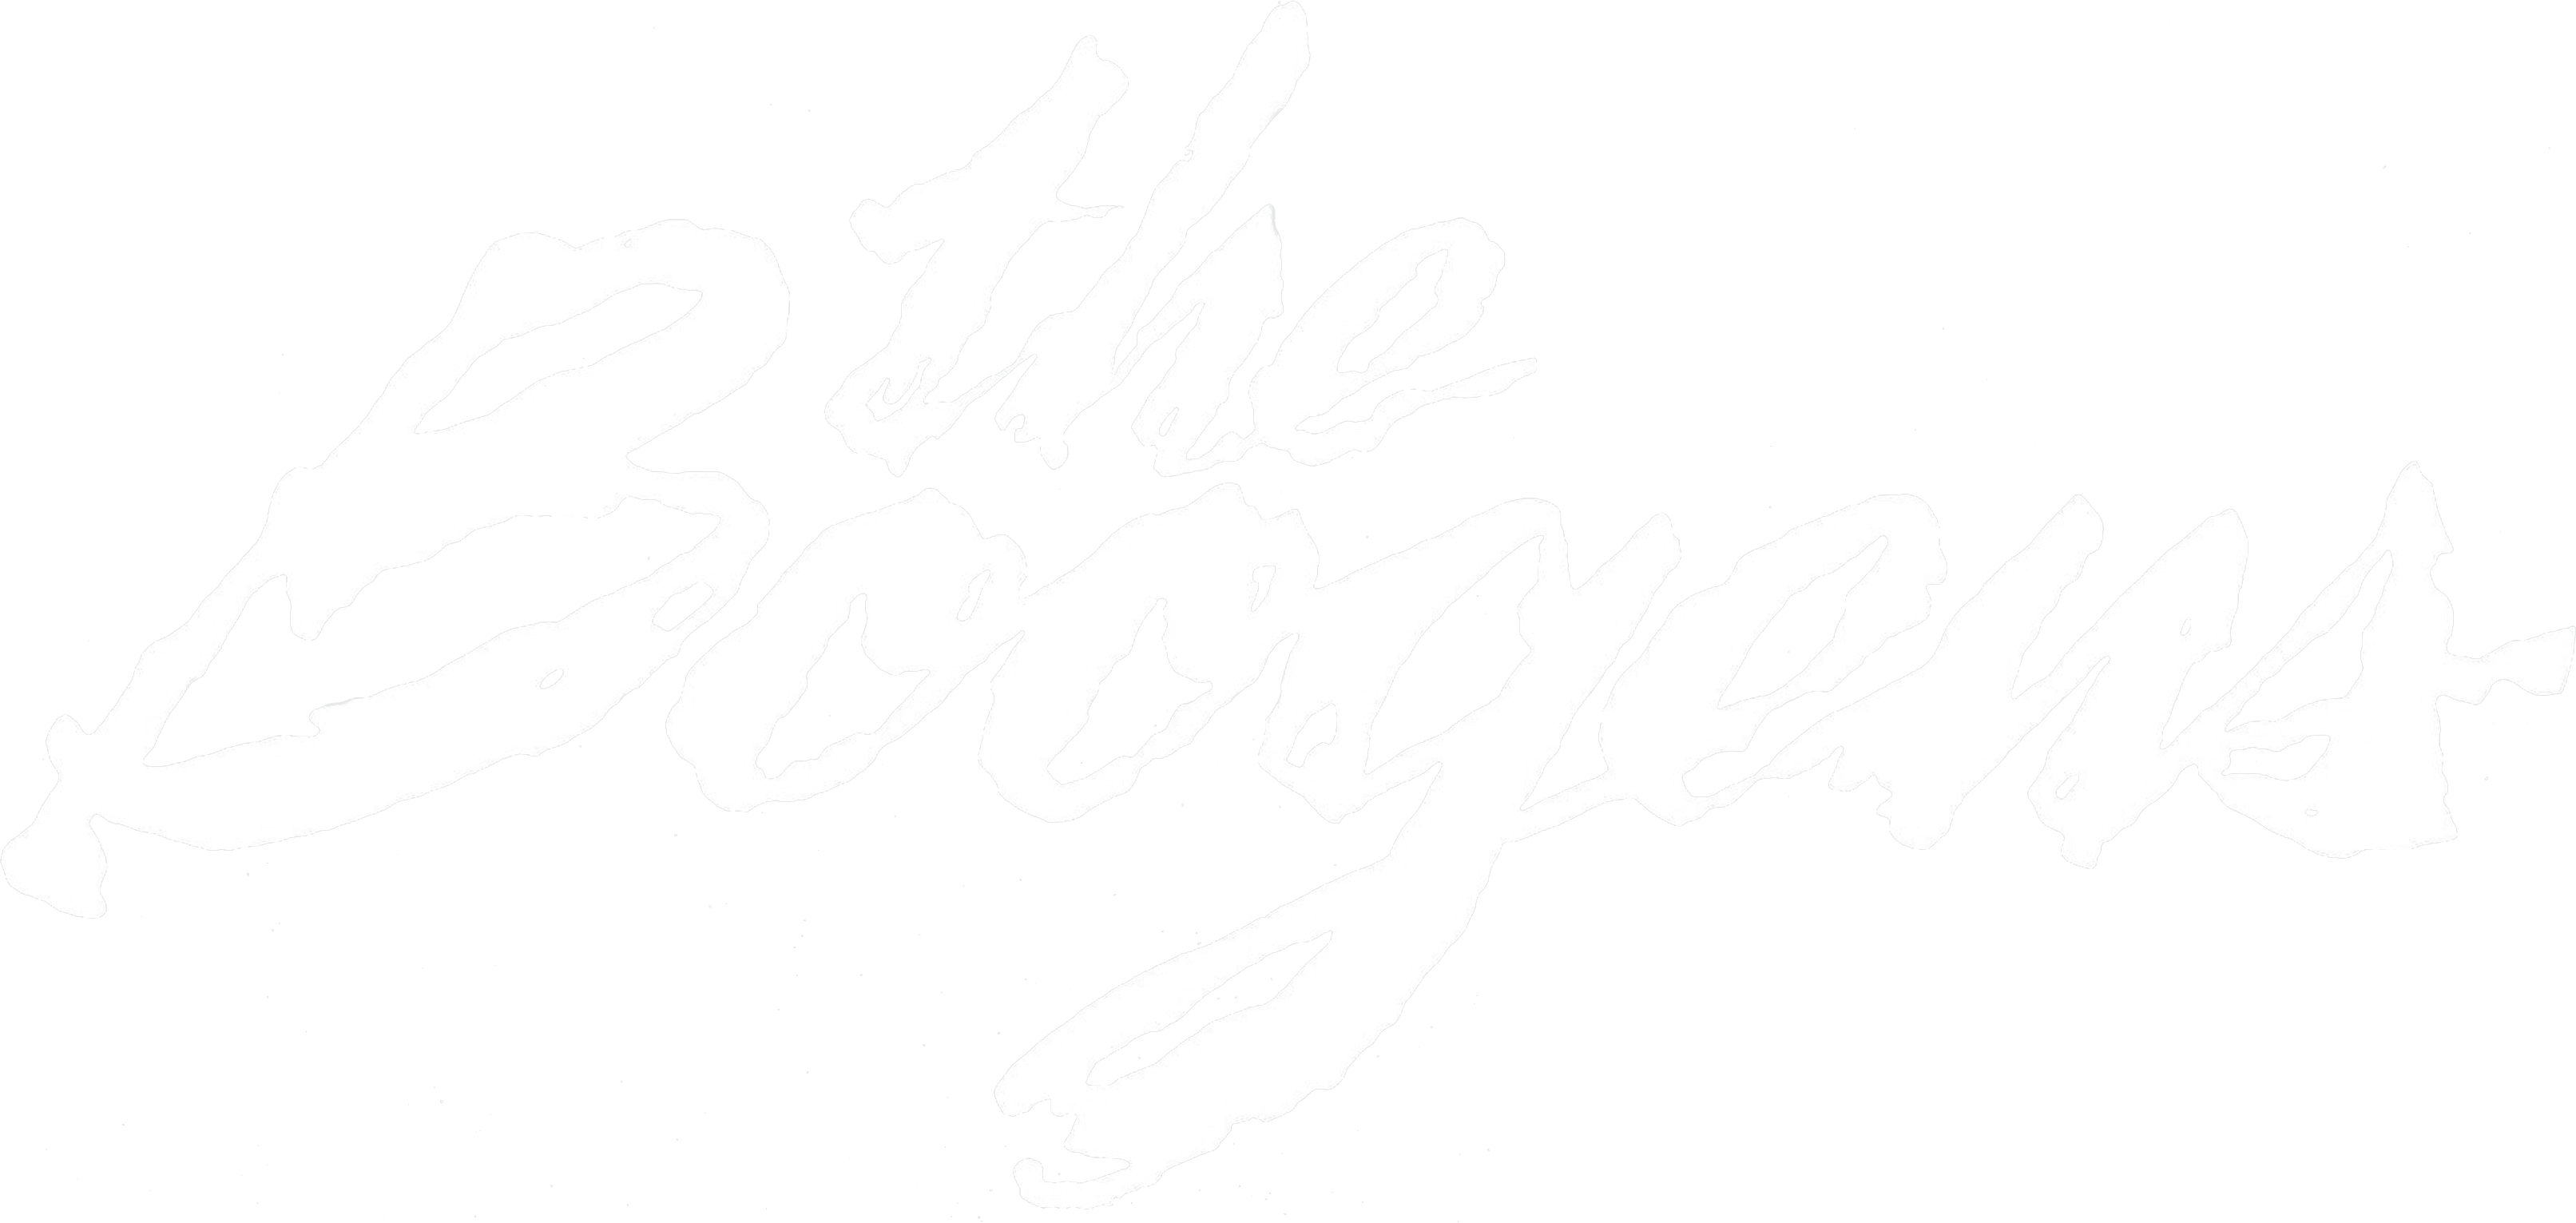 The Boogens logo